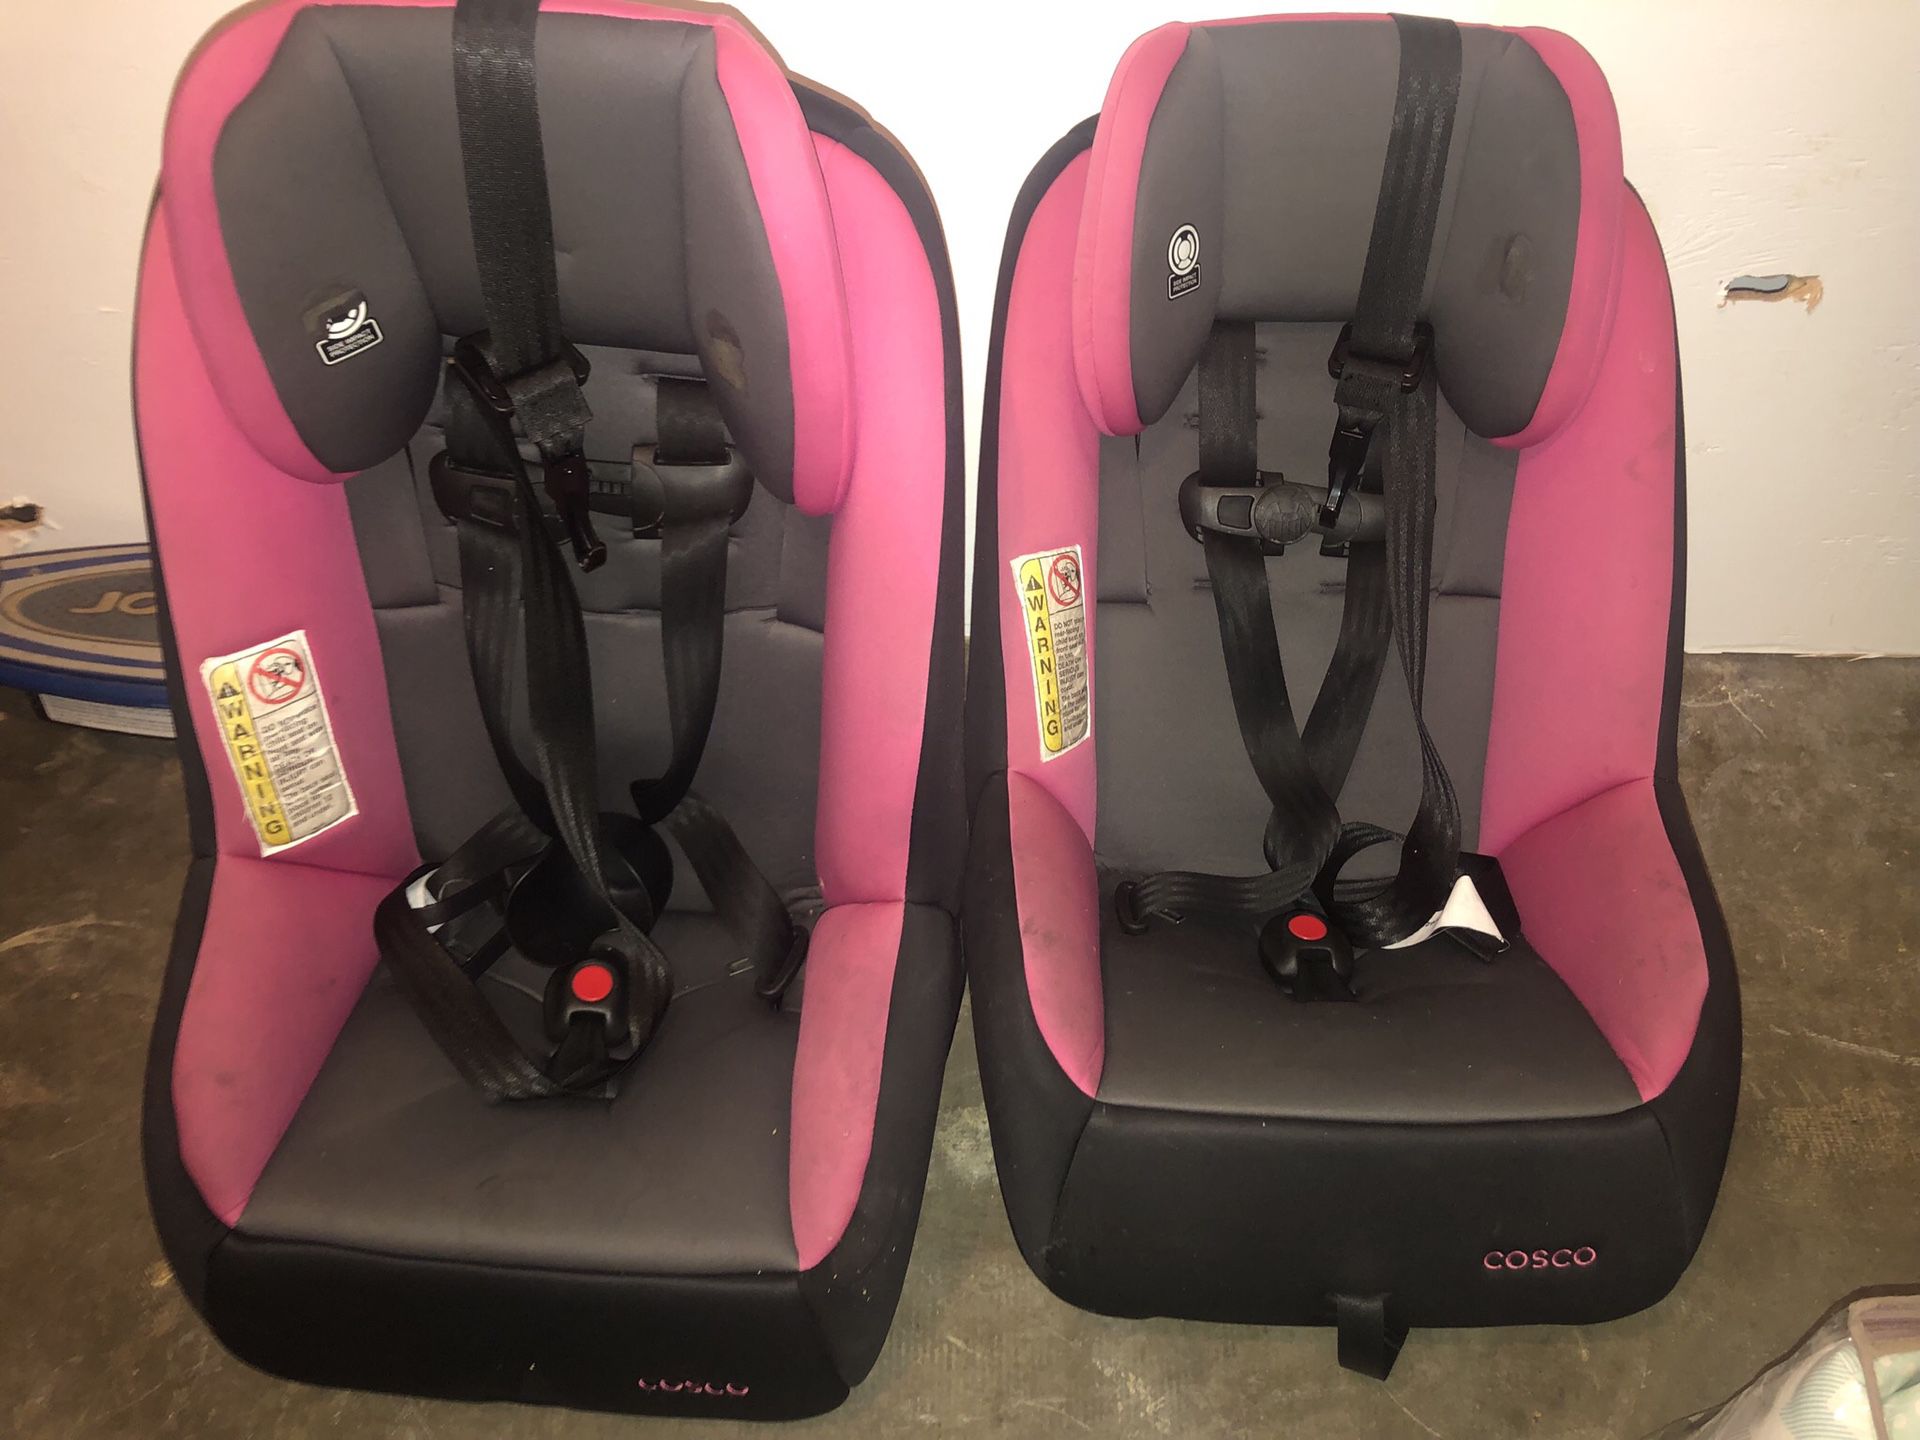 Cosco Child Car Seats